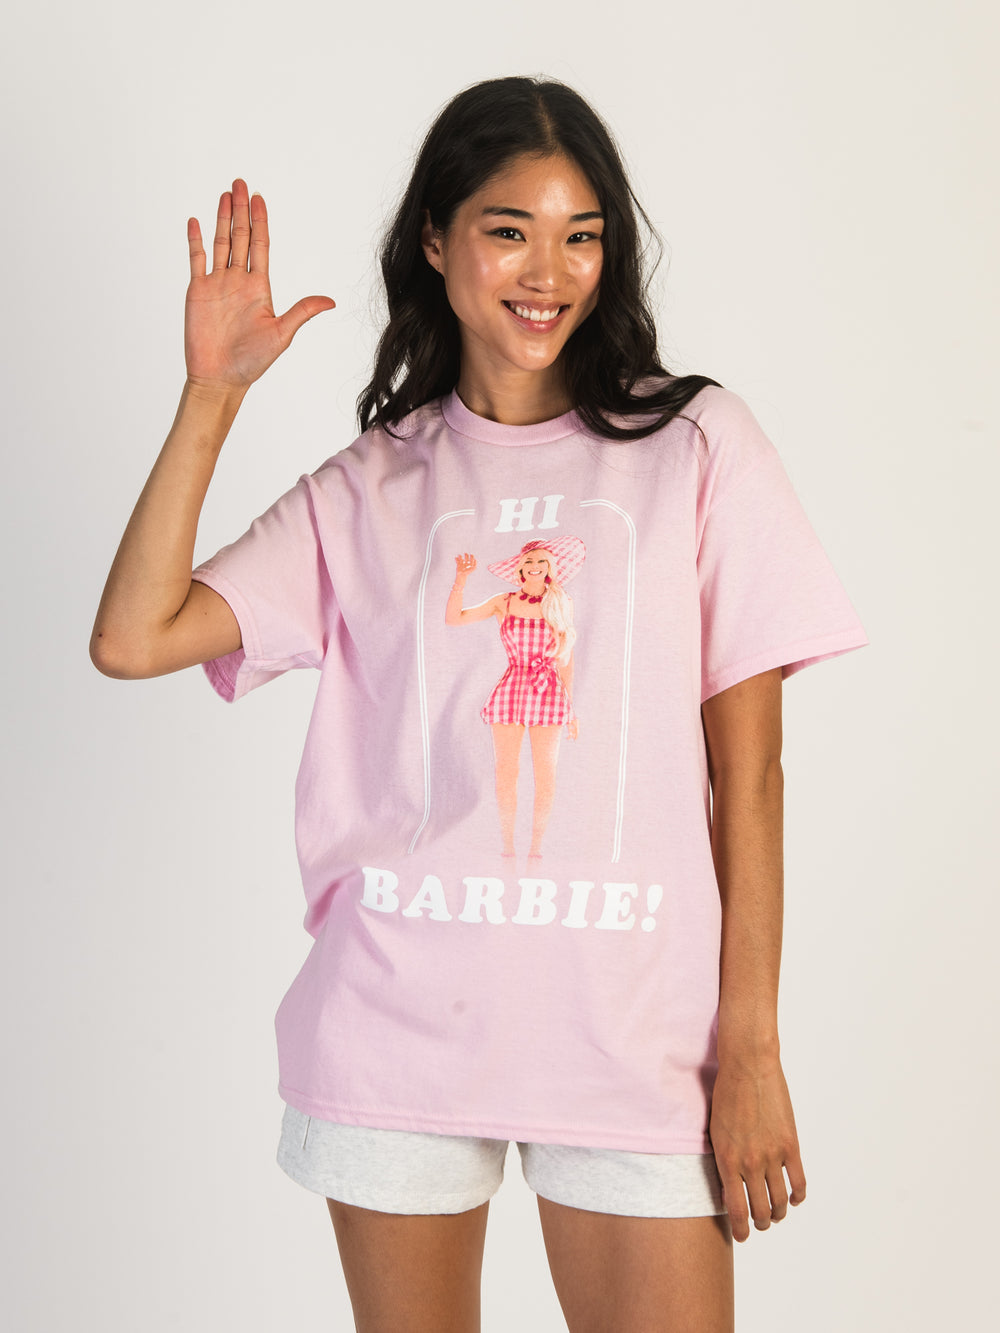 Barbie Shirt, Barbie Outfit, Barbie Logo T shirt, Barbie Women T Shirt